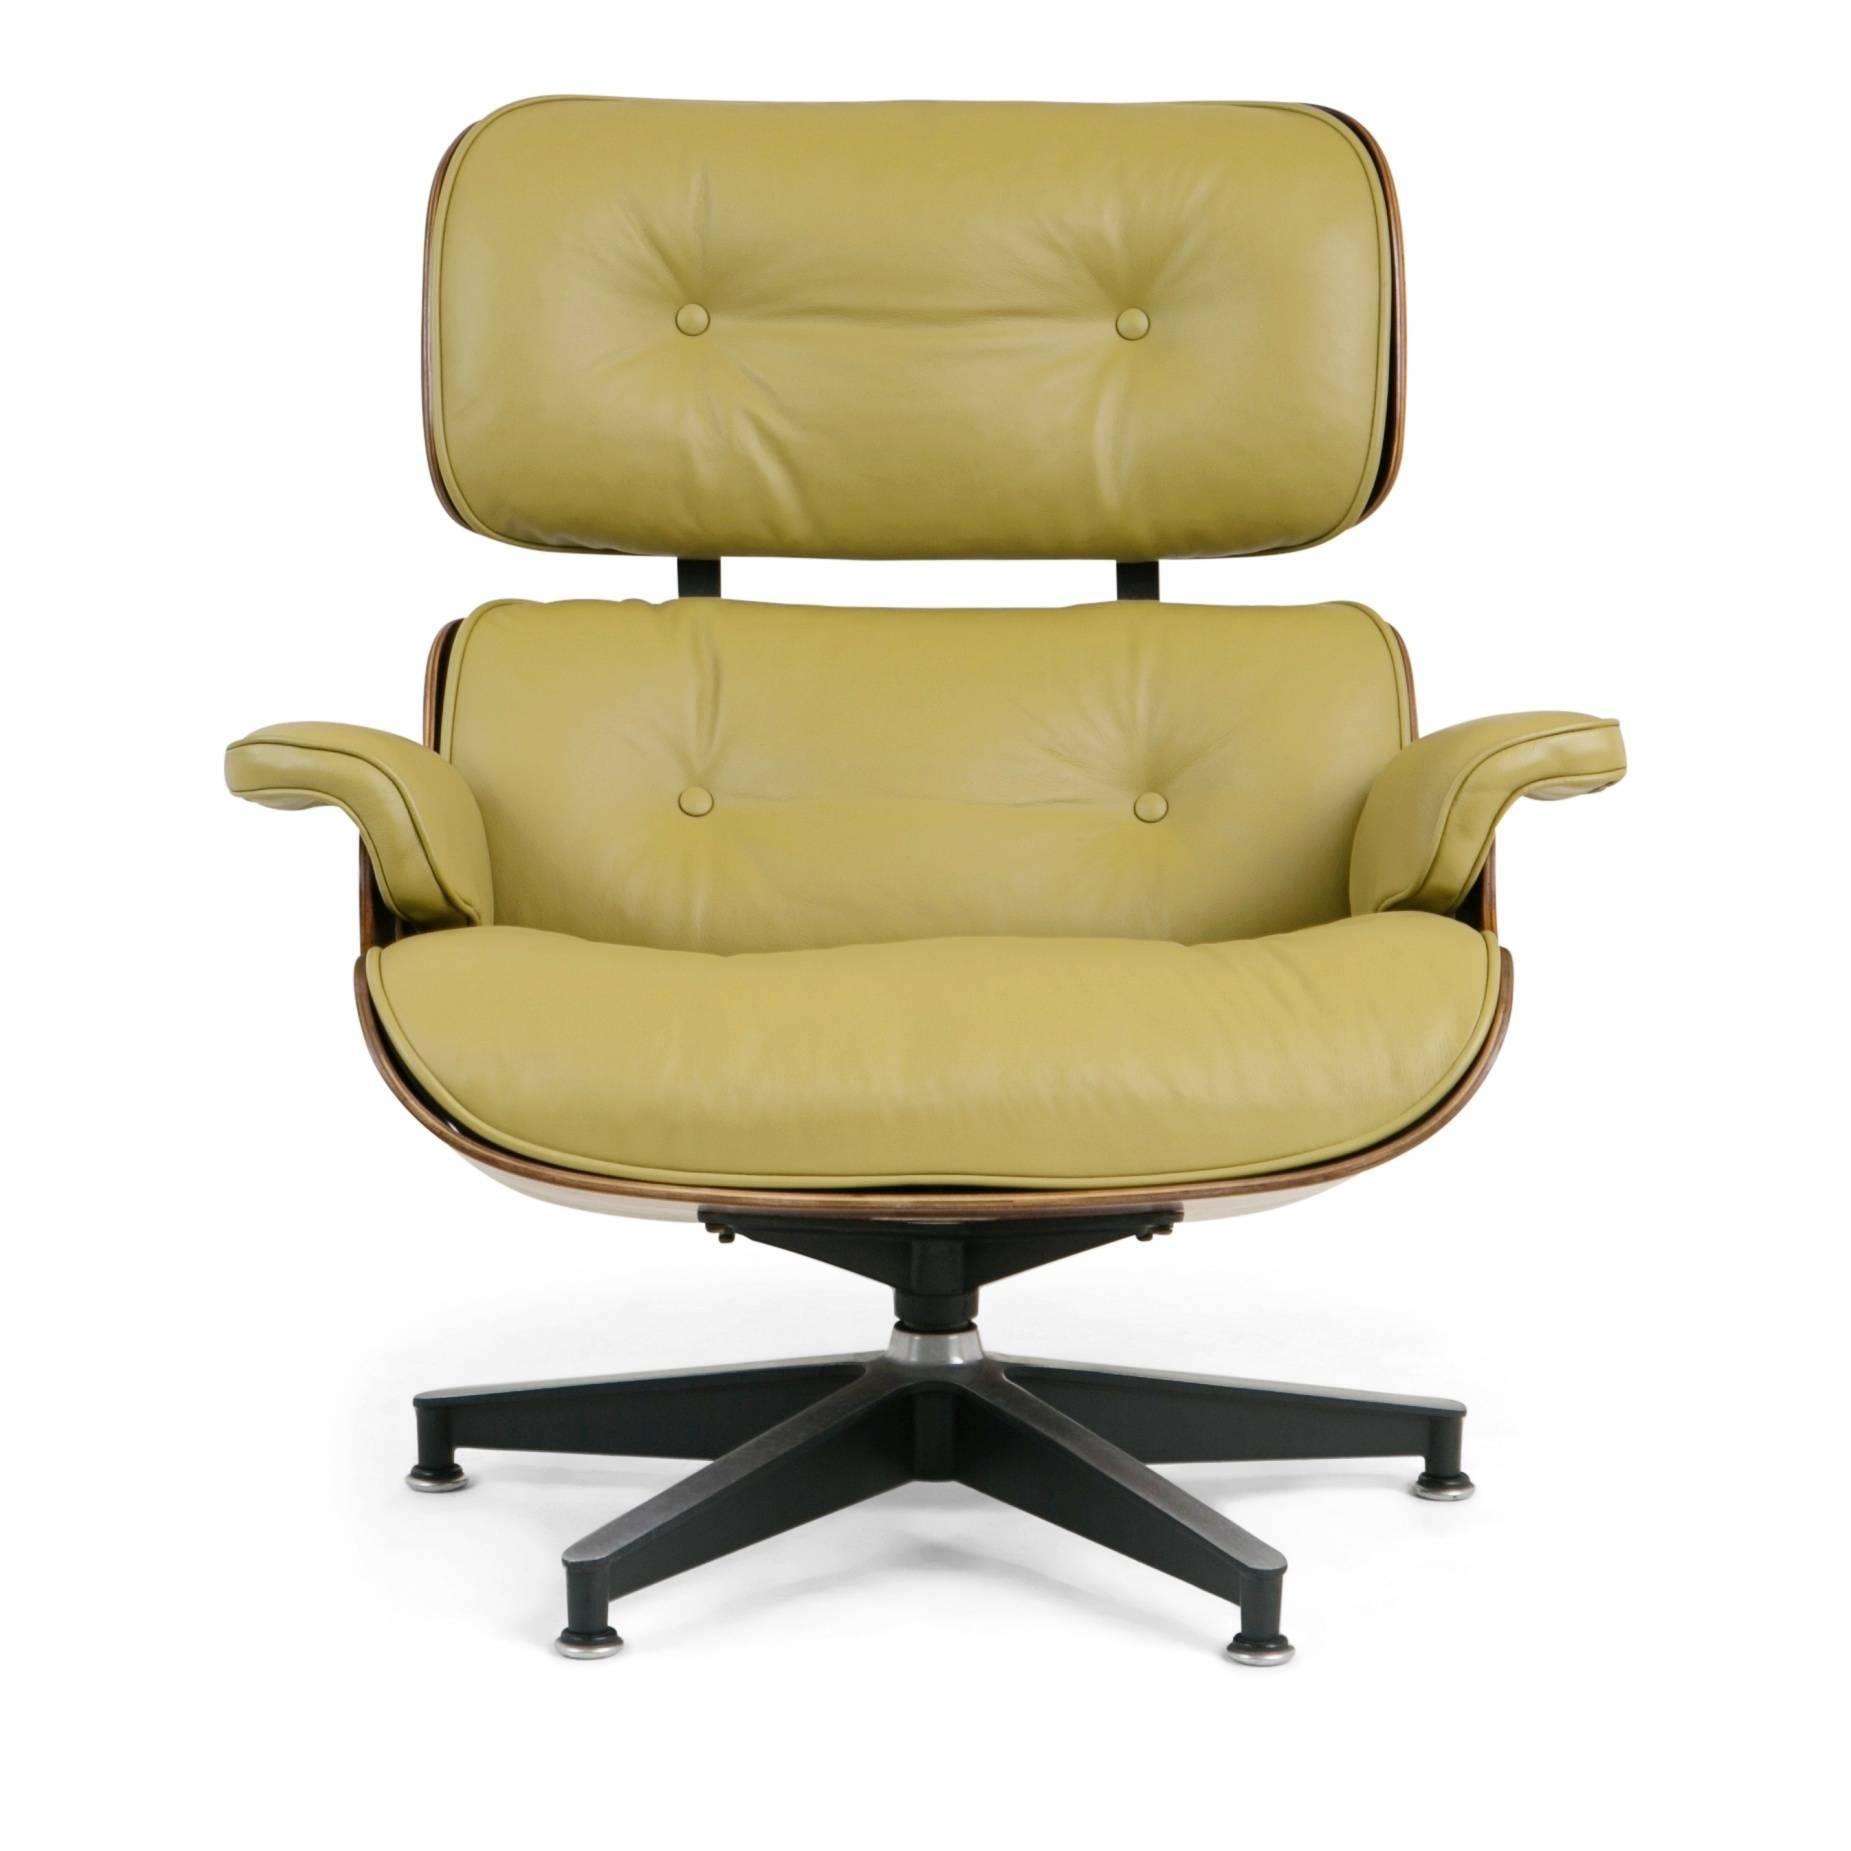 model 670 chair